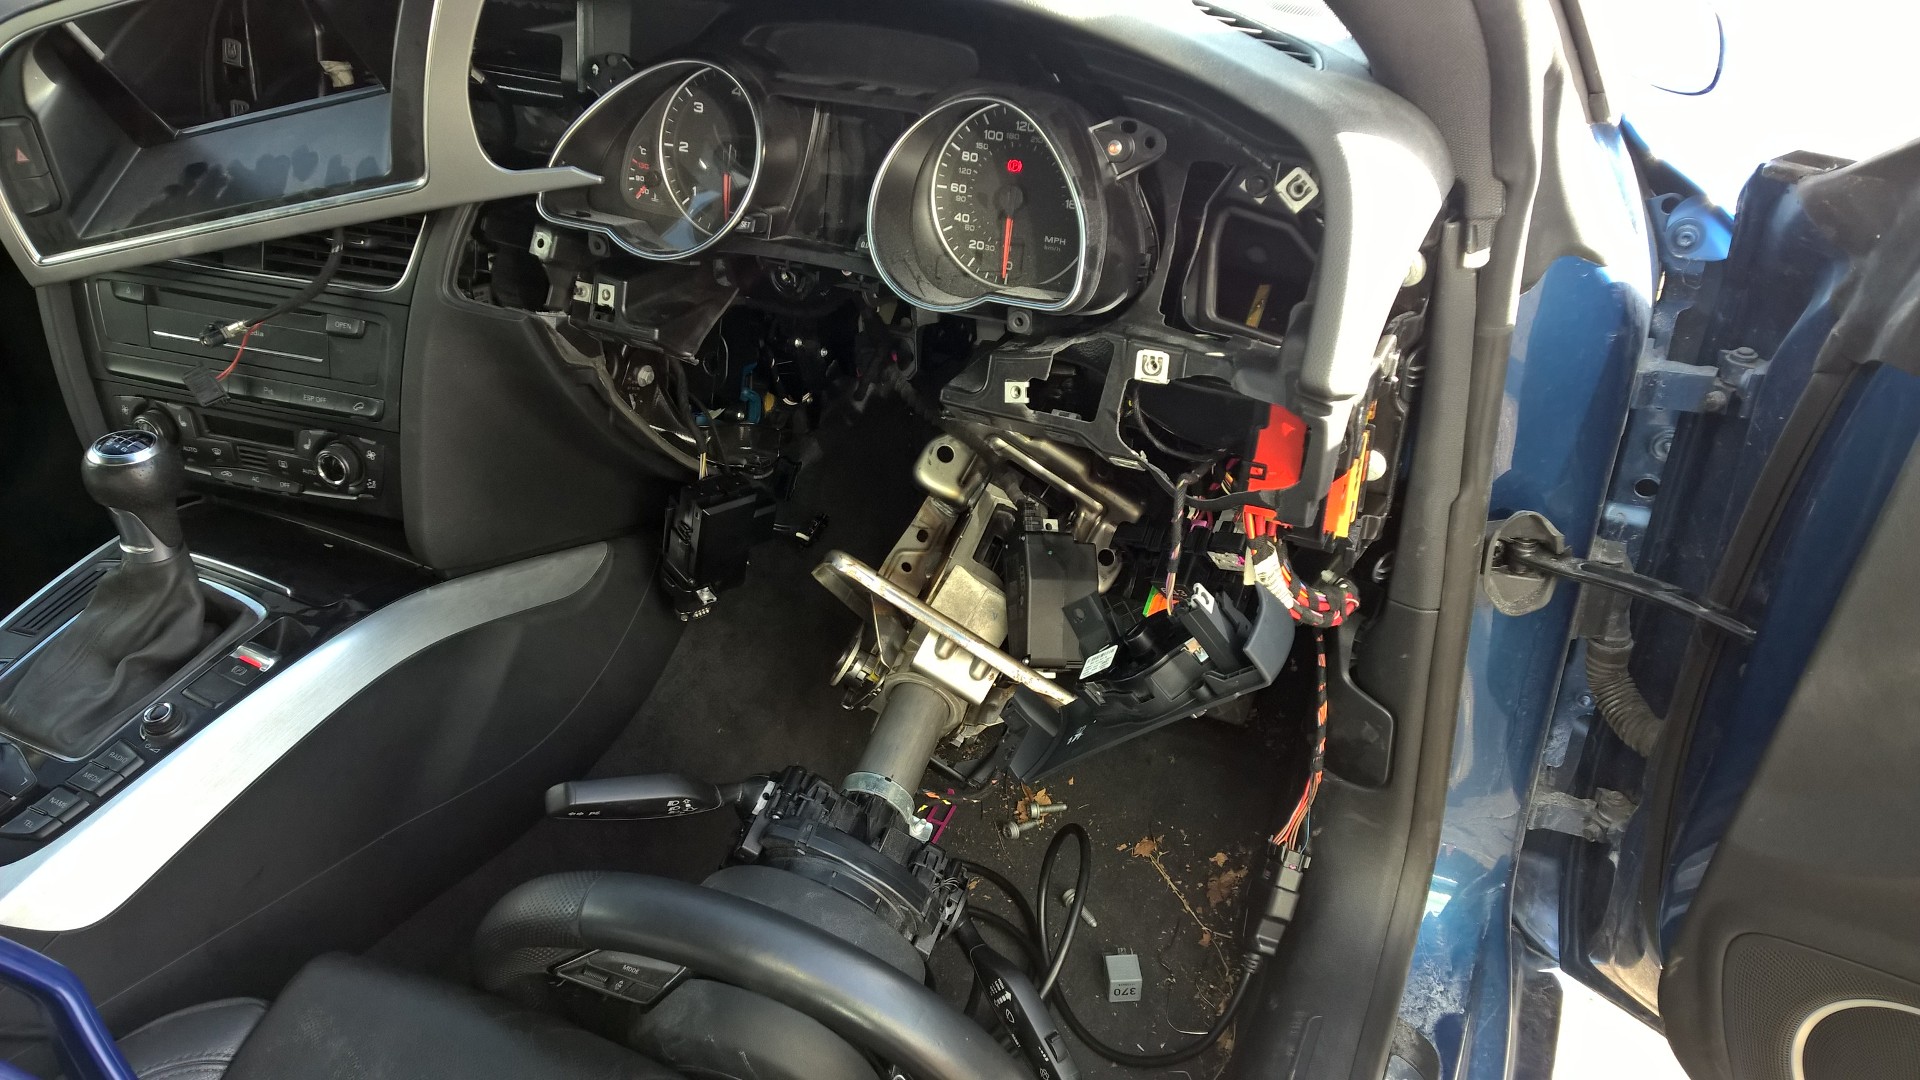 Audi A5 repair part 2 continued…